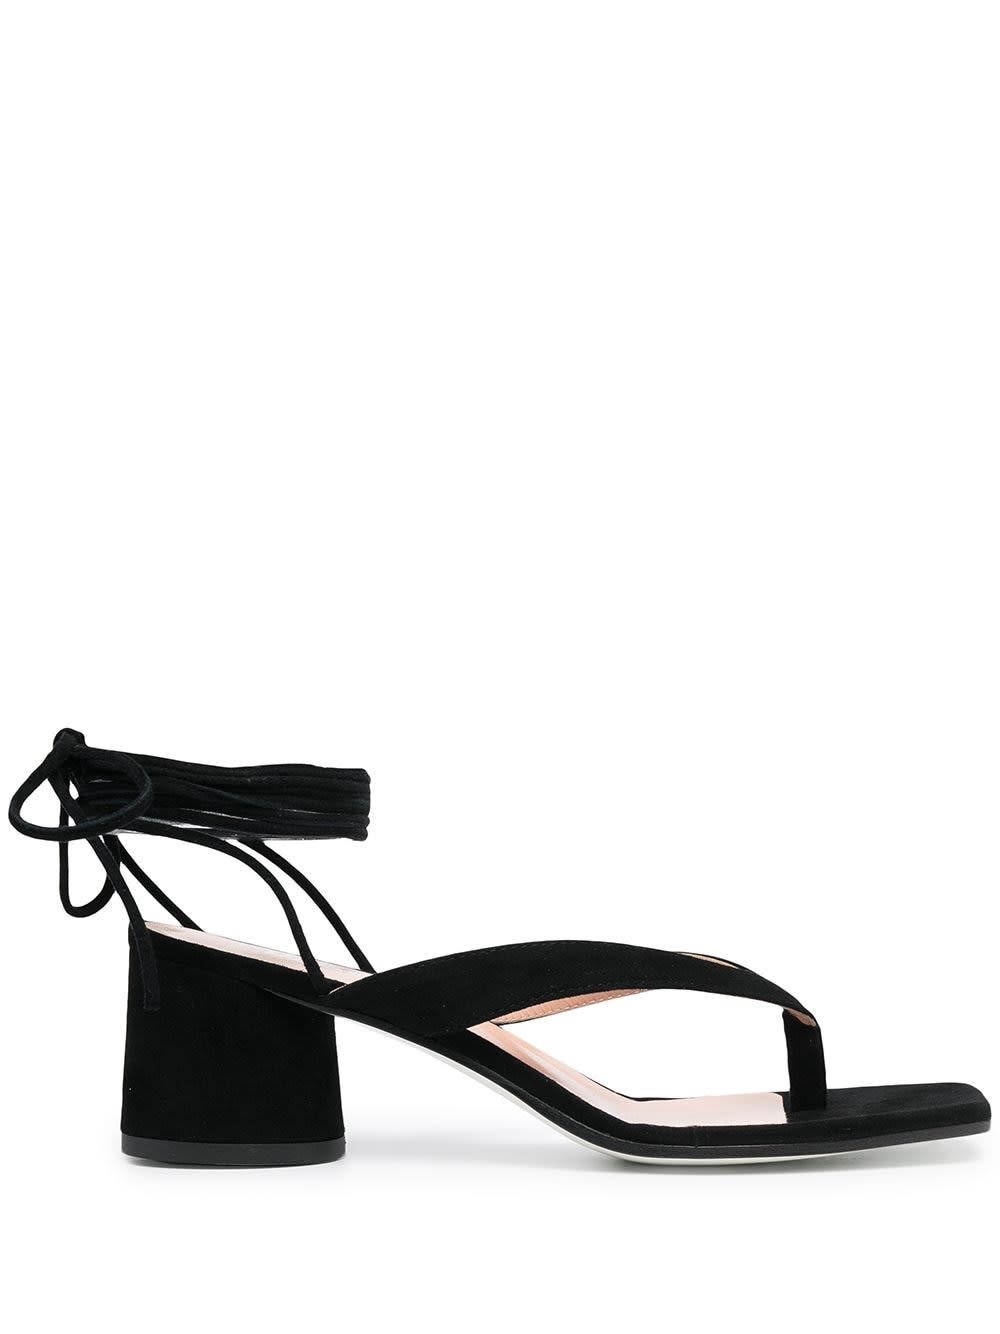 Pollini Black Suede Sandals With Wide Heel